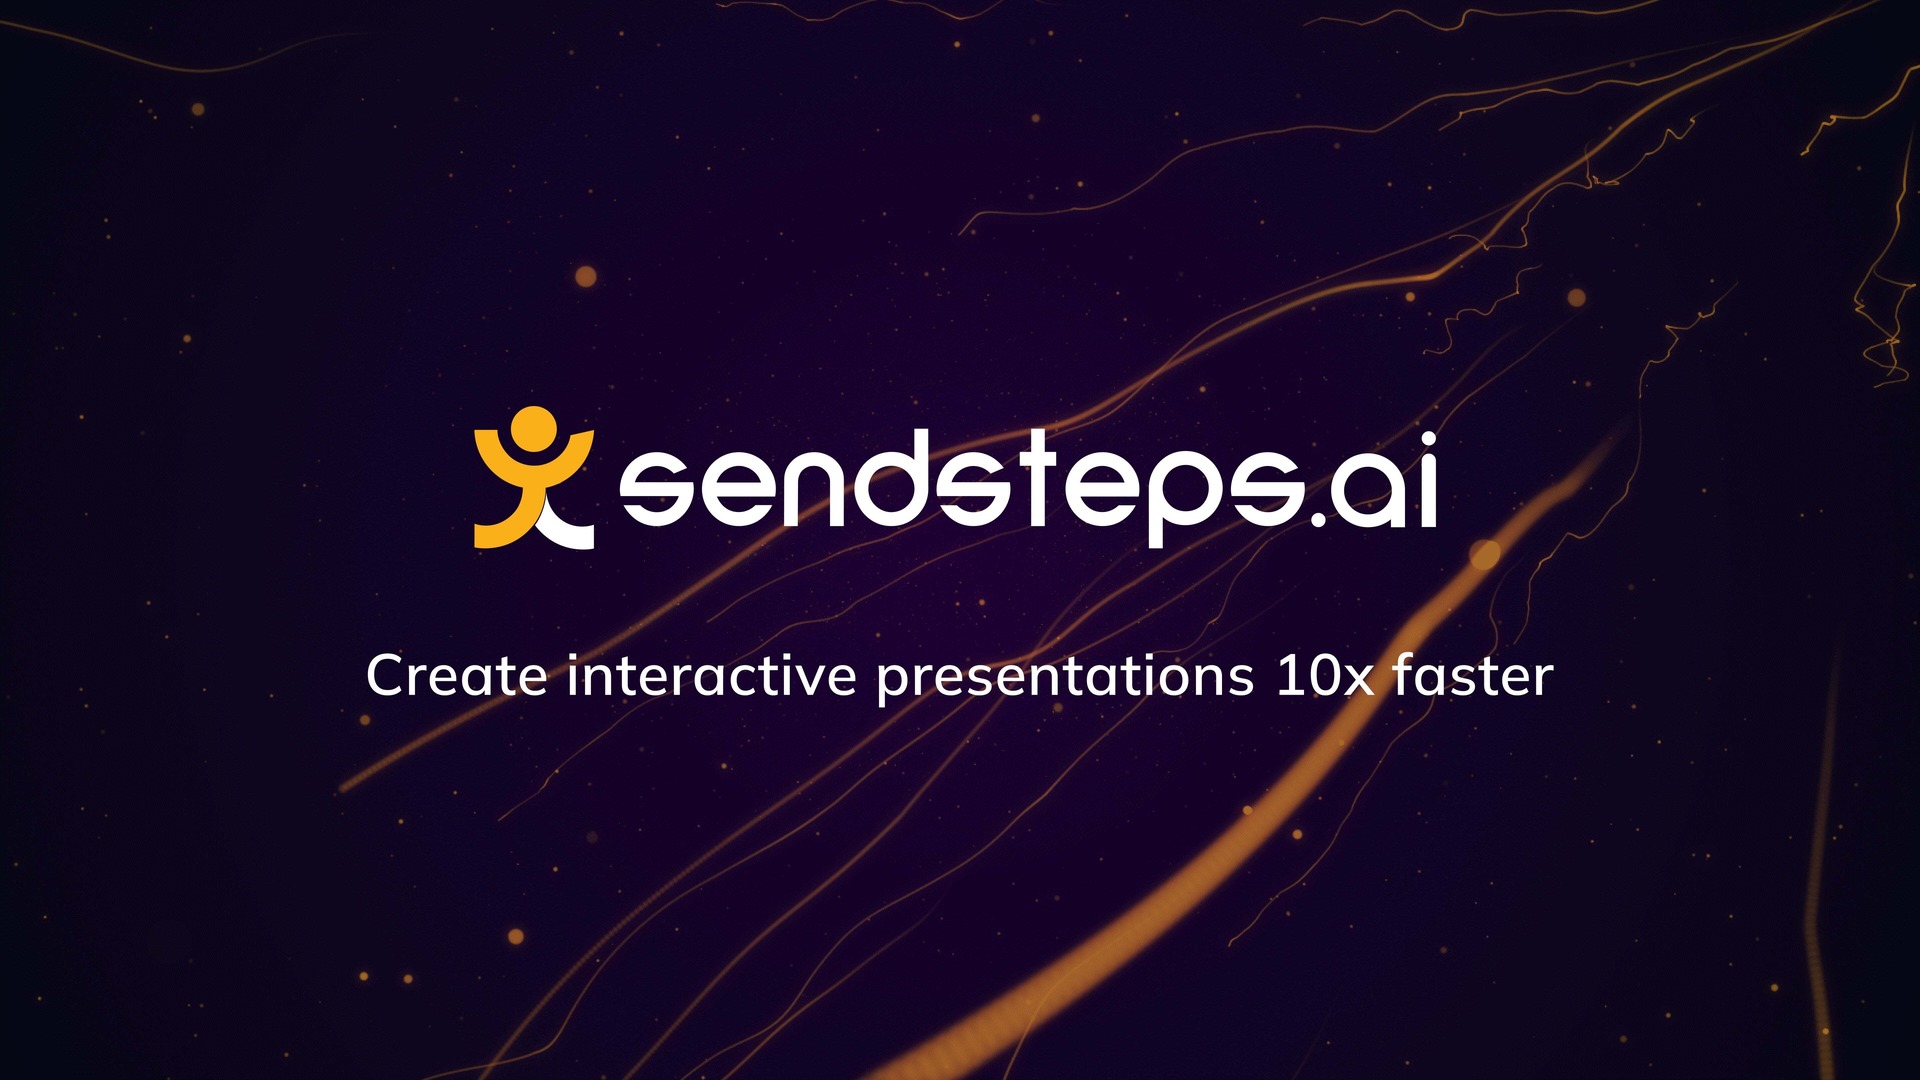 Sendsteps.ai - A tool to create interactive presentations